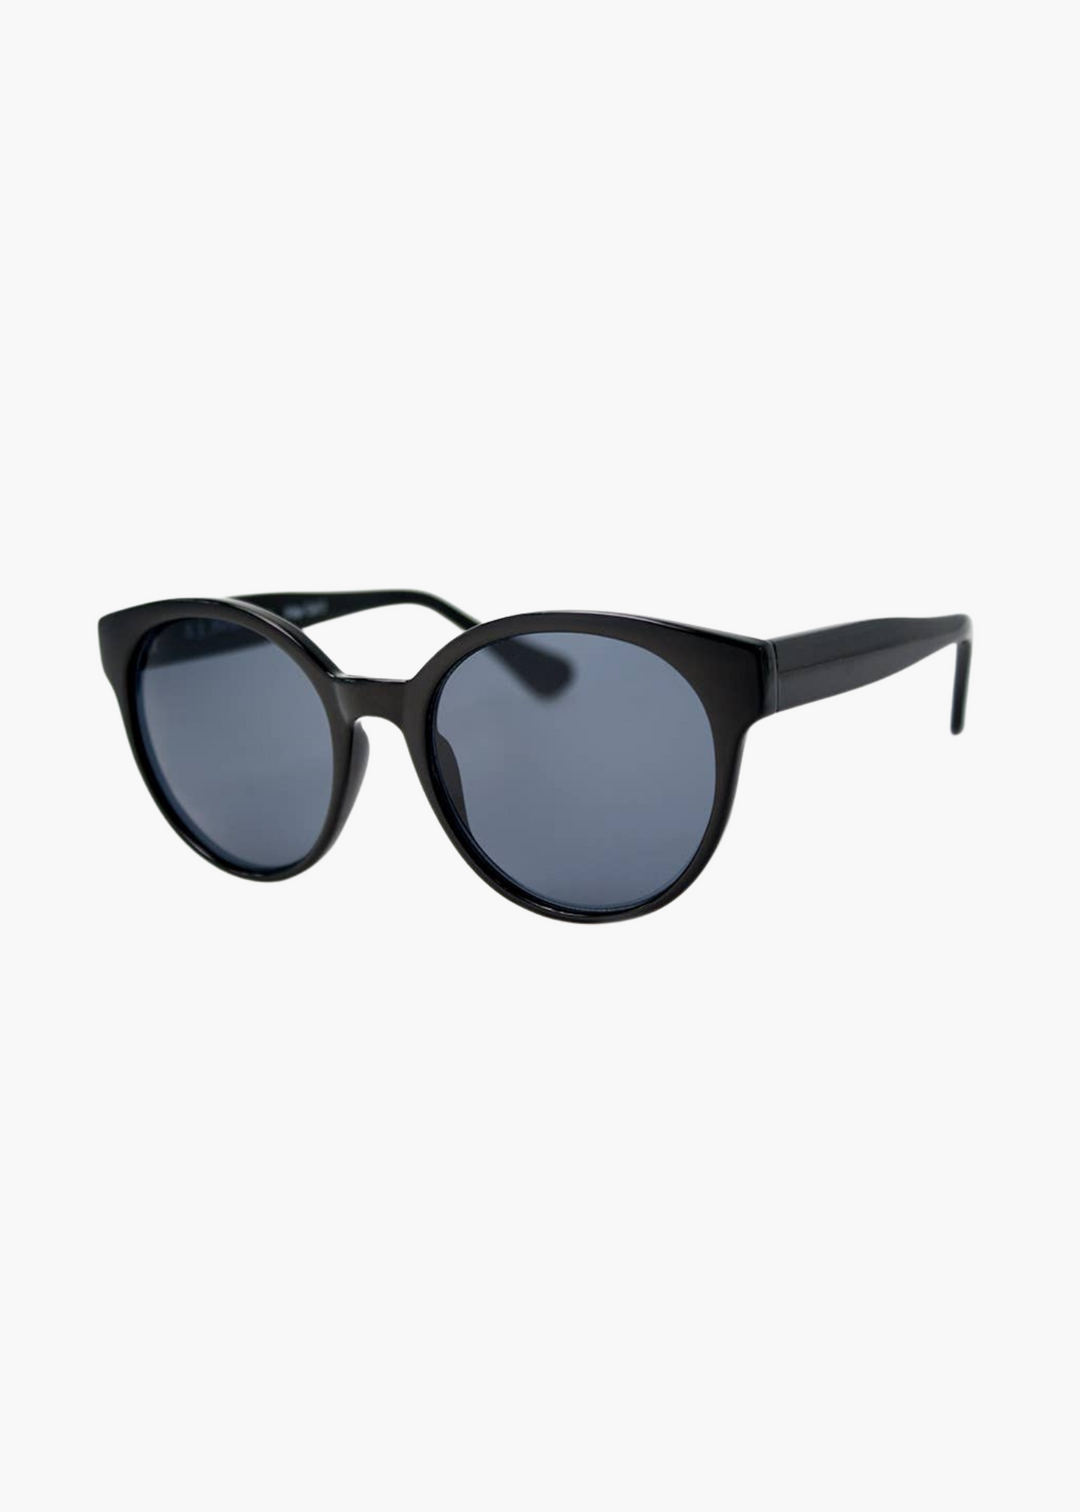 Millie Sunglasses in Black